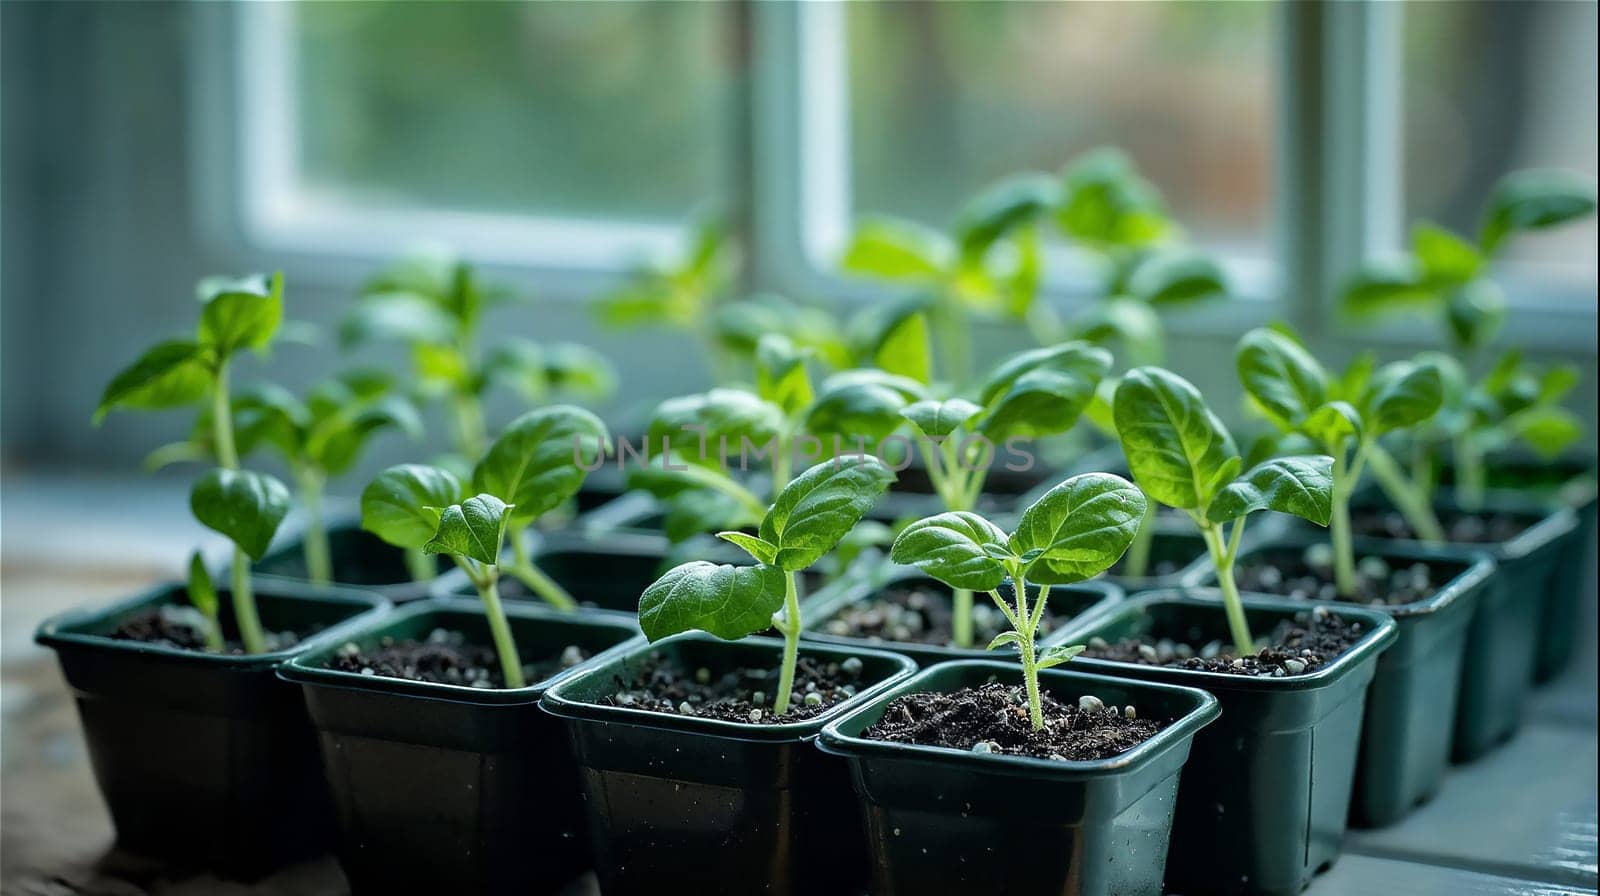 Group of basil seedlings in black pots by window.